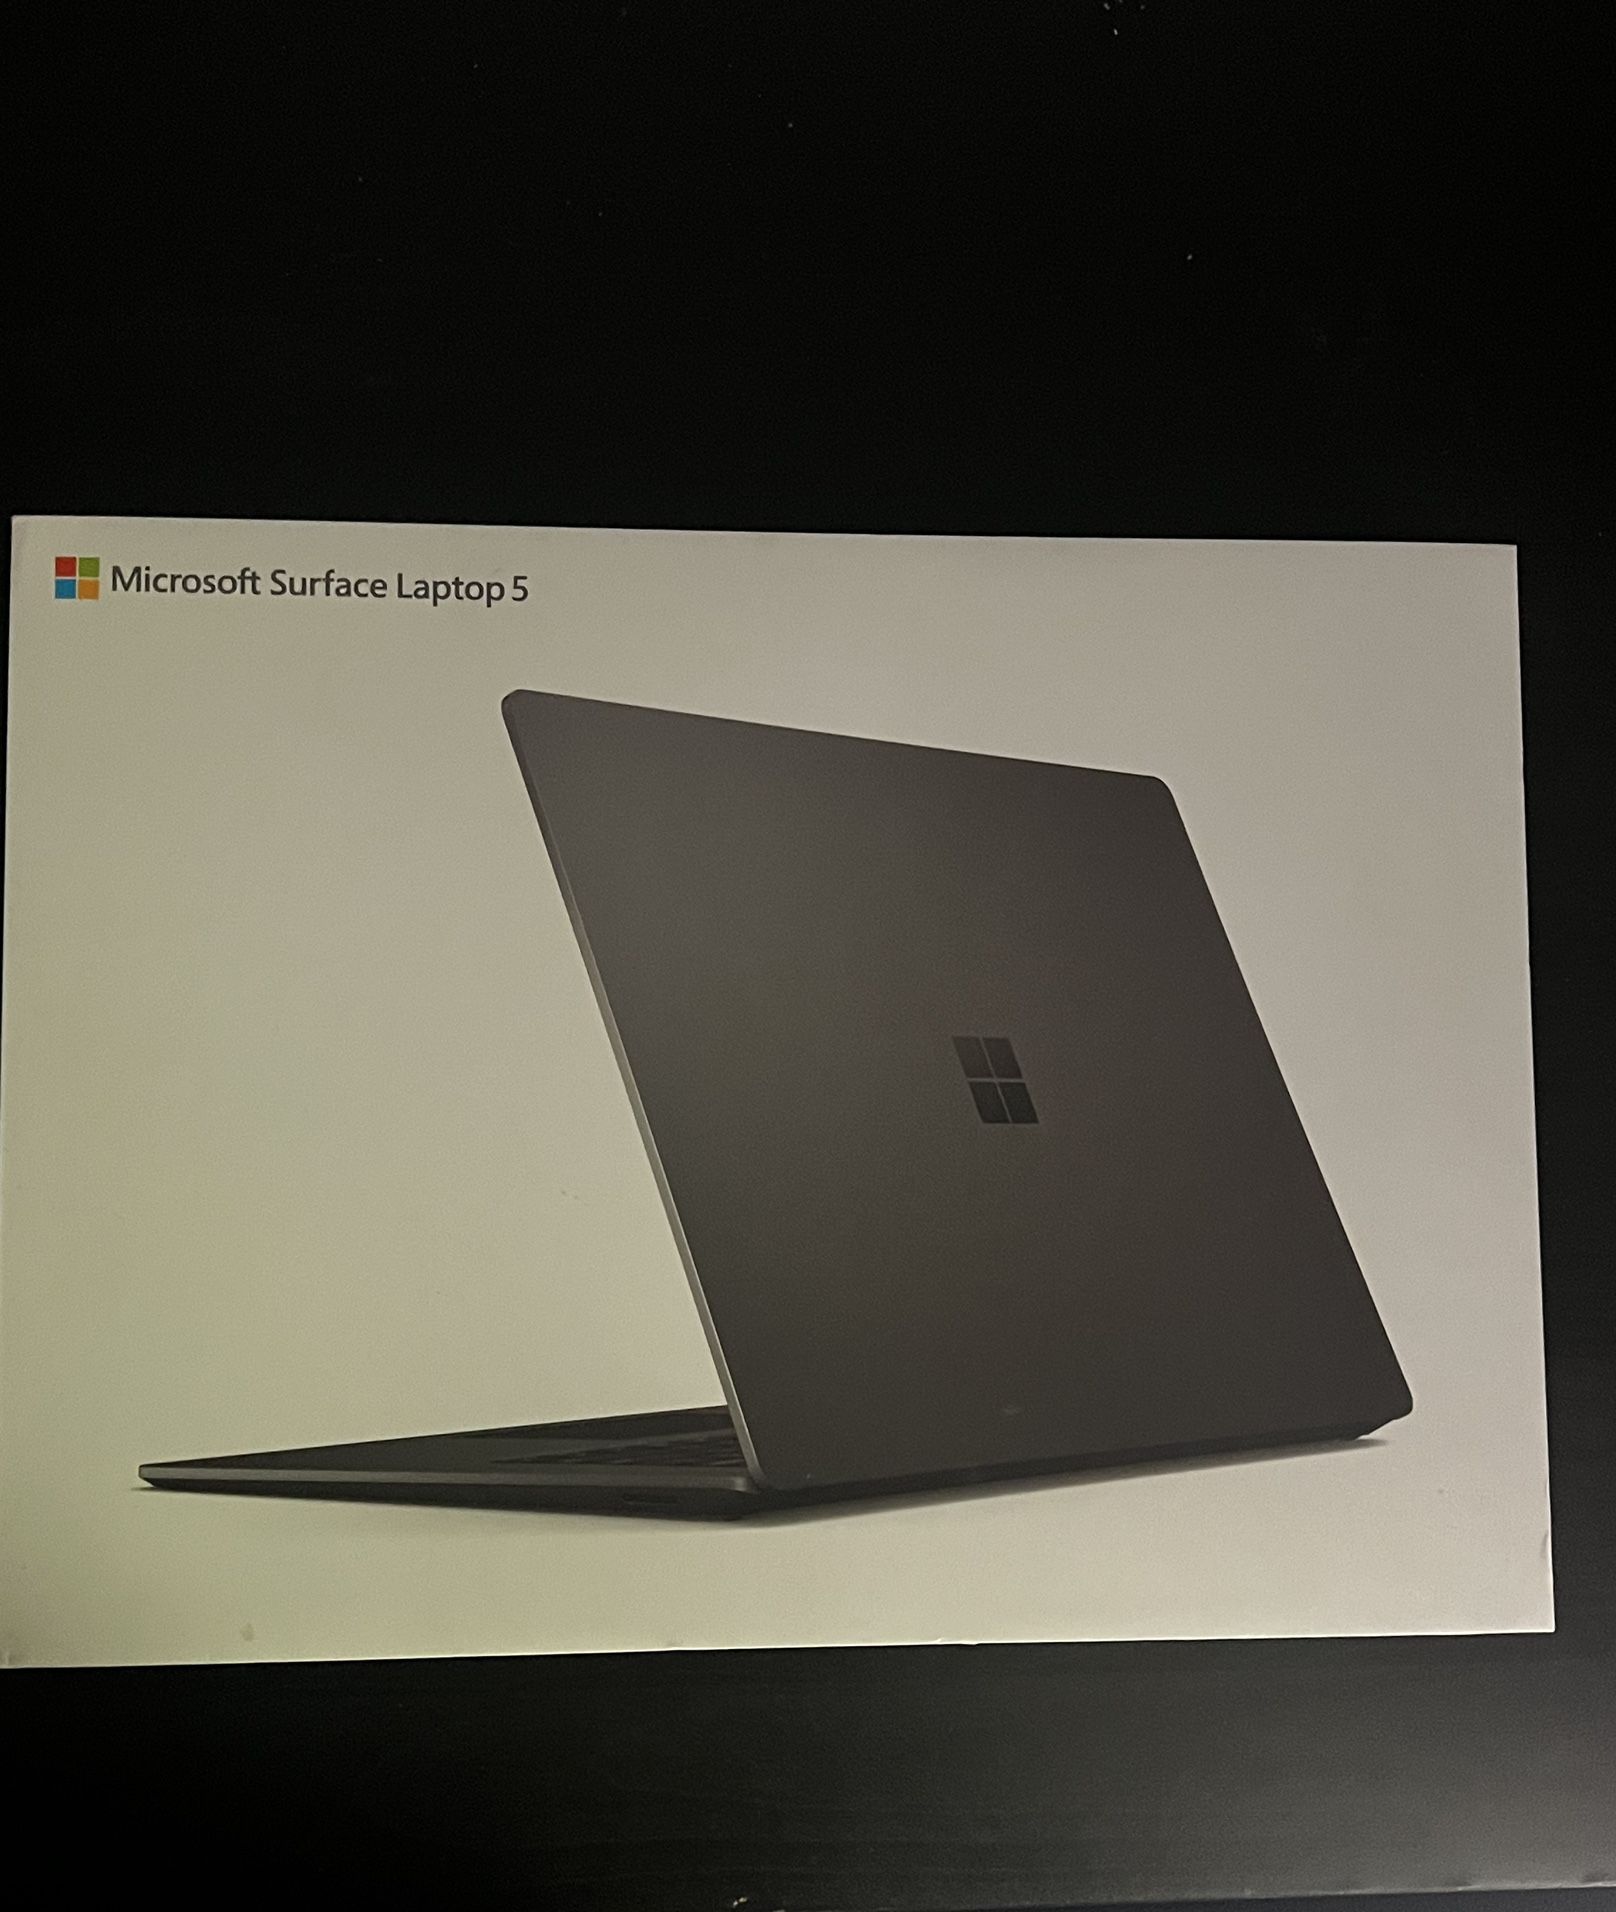 Microsoft surface laptop 5 